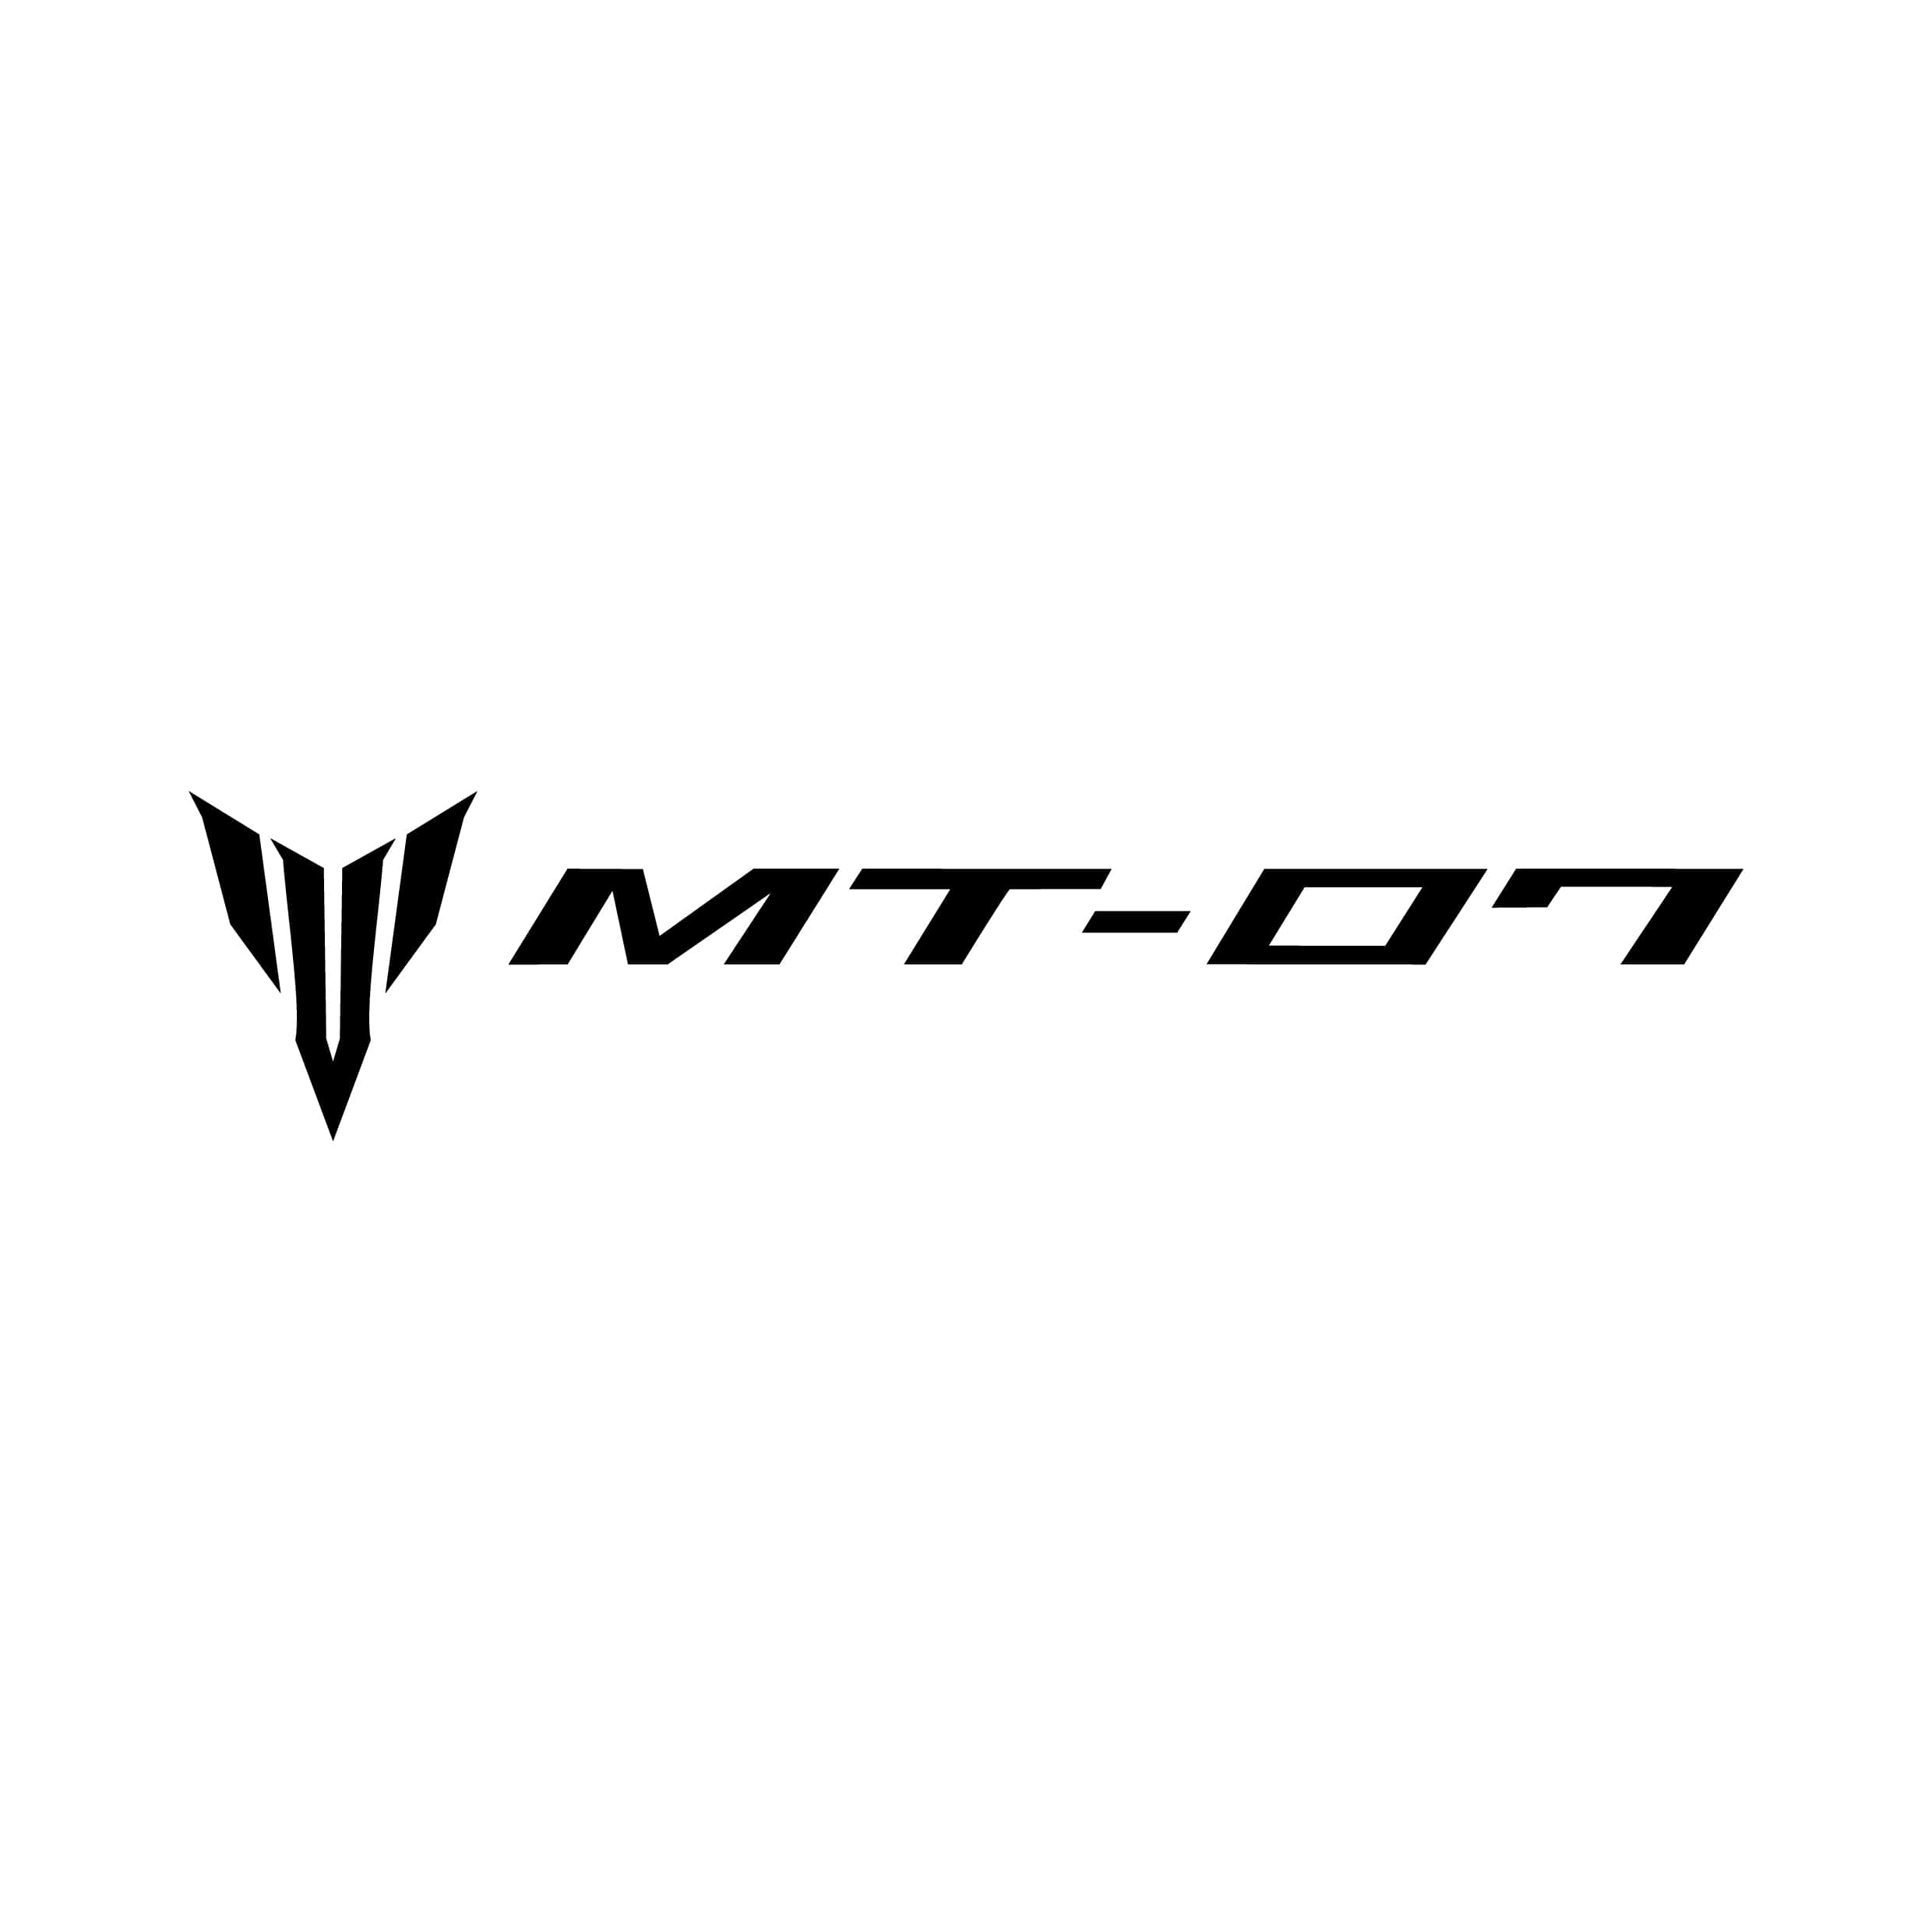 stickers-mt-07-yamaha-ref90-autocollant-moto-sticker-deux-roue-autocollants-decals-sponsors-tuning-sport-logo-bike-scooter-min